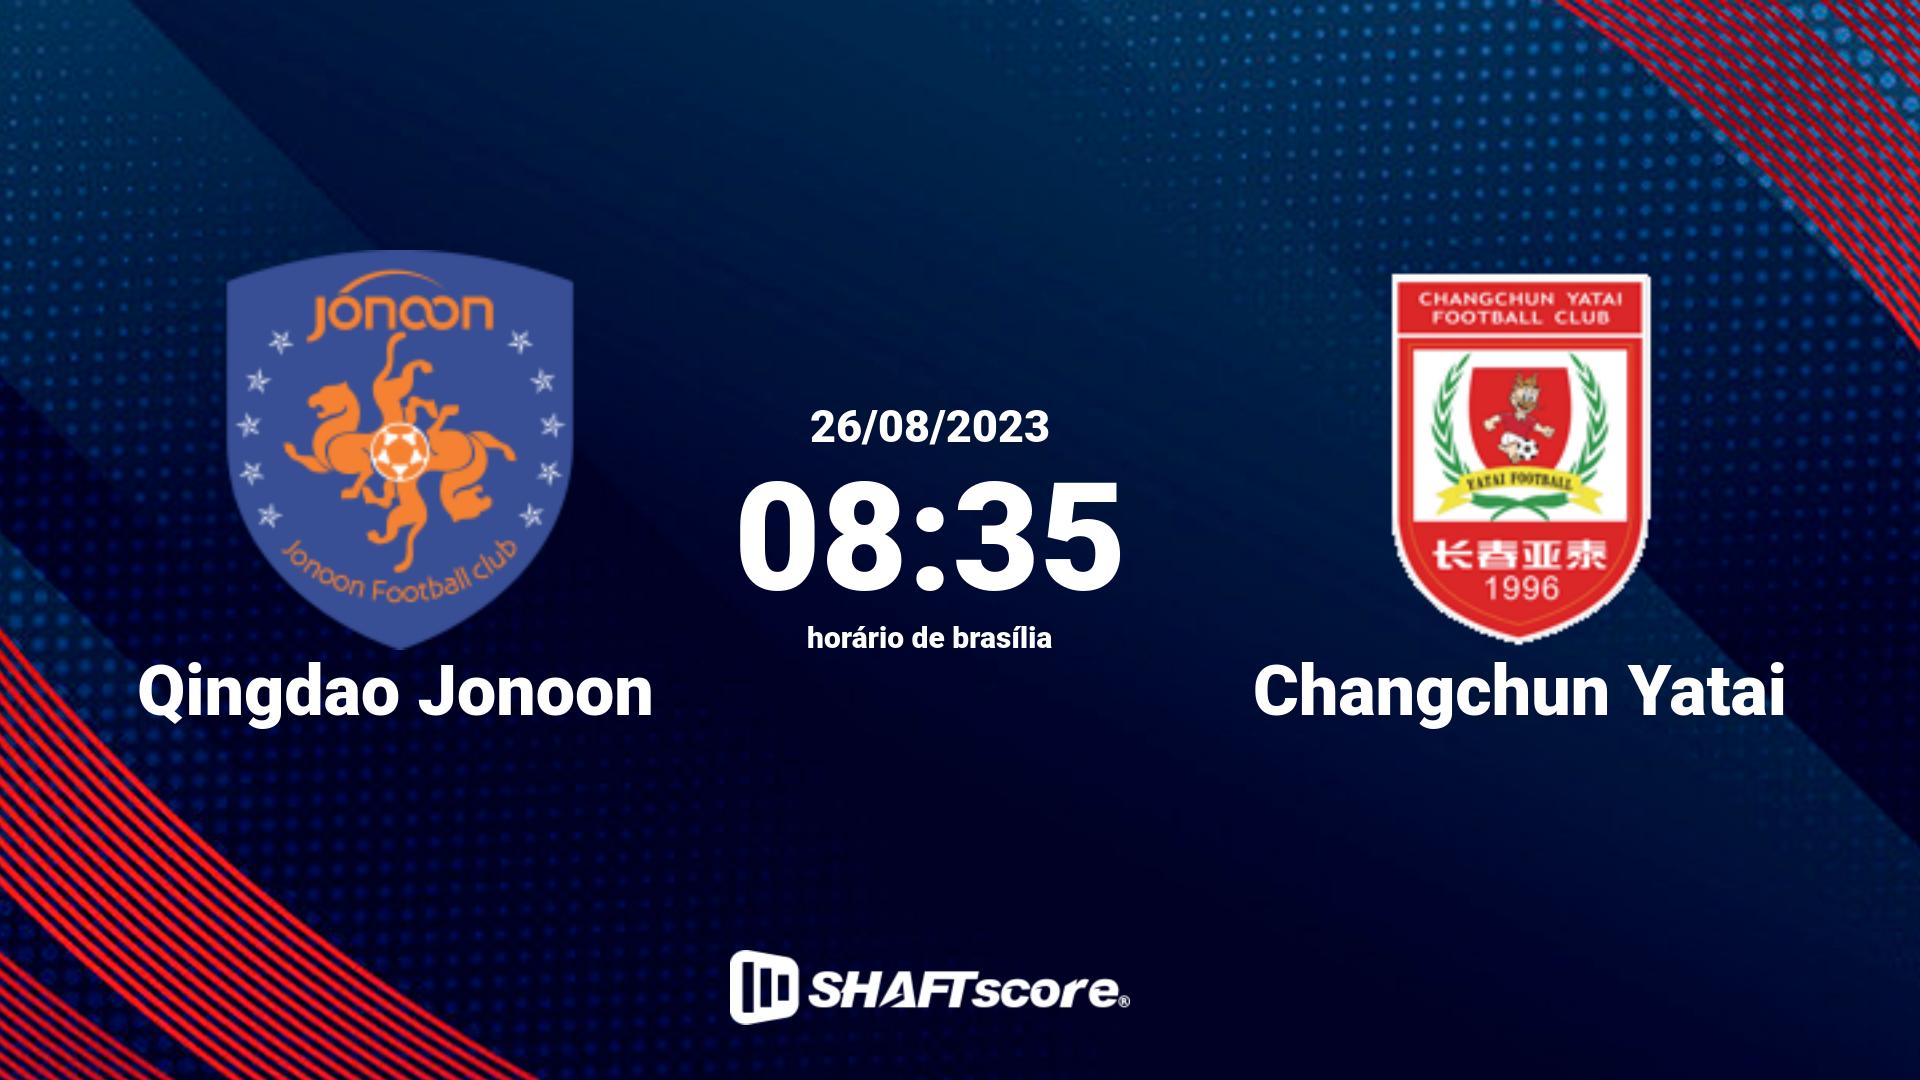 Estatísticas do jogo Qingdao Jonoon vs Changchun Yatai 26.08 08:35